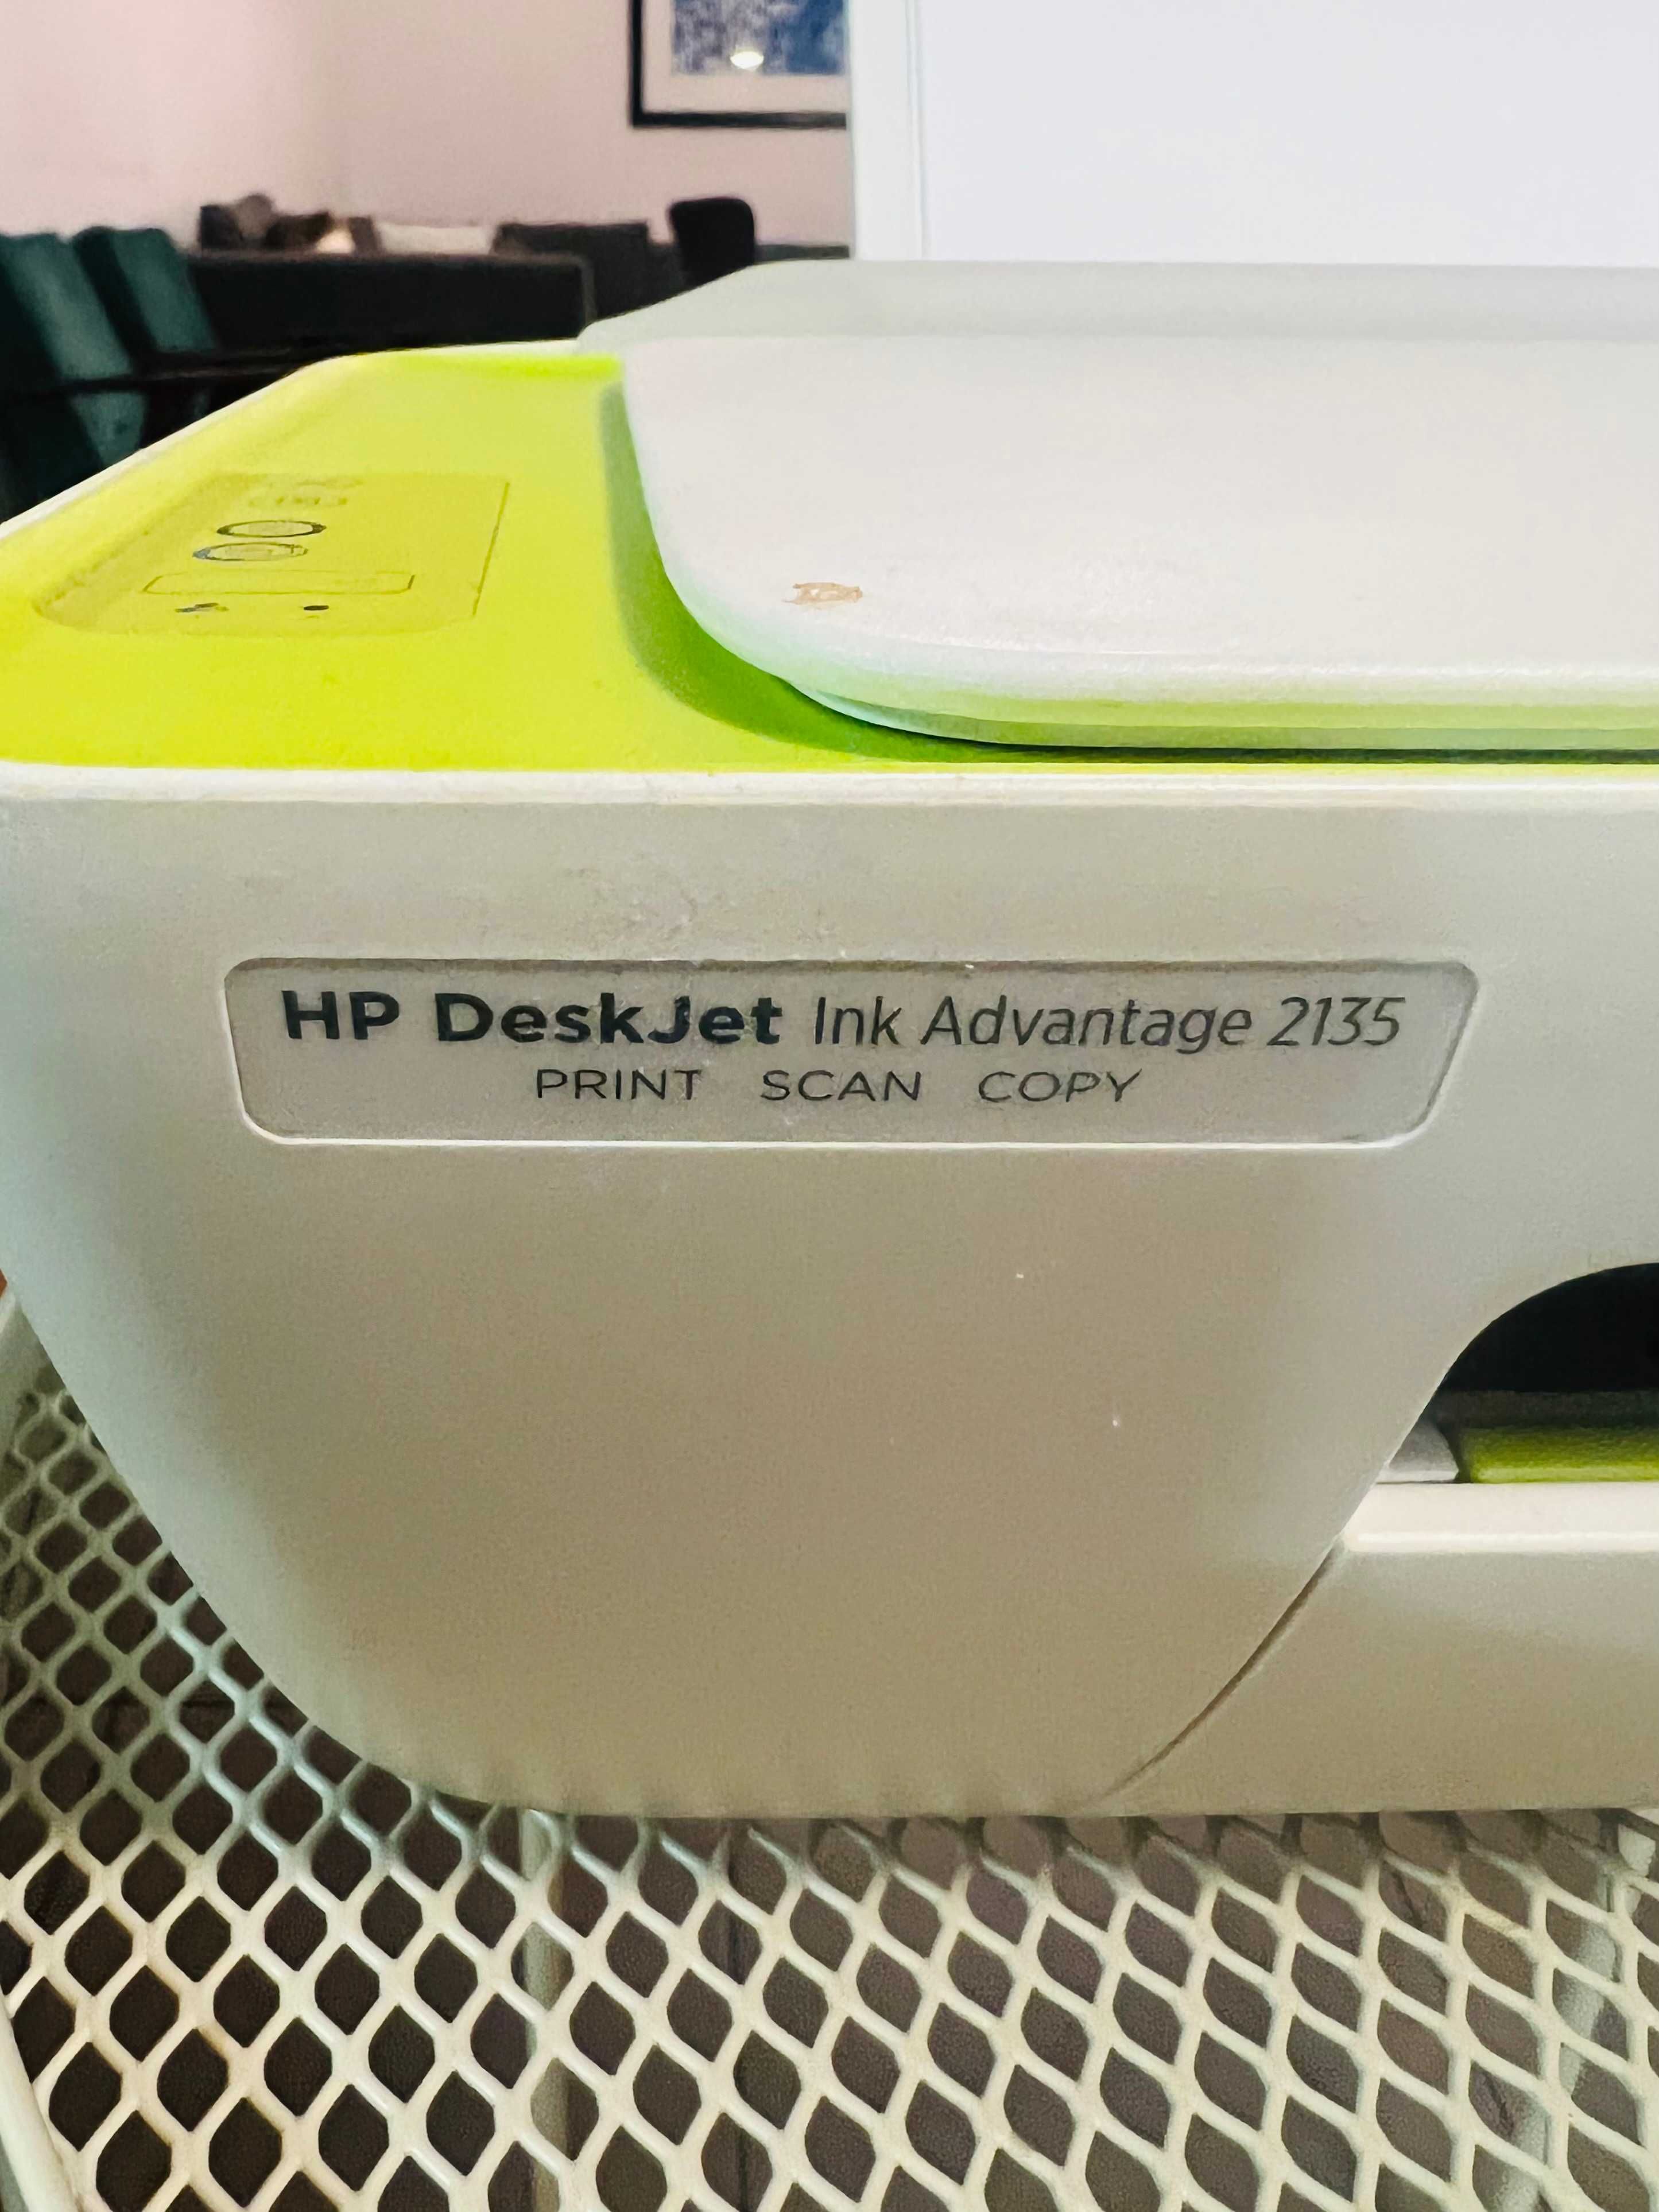 Drukarka ksero skaner web HP DeskJet 2135 kolorowa